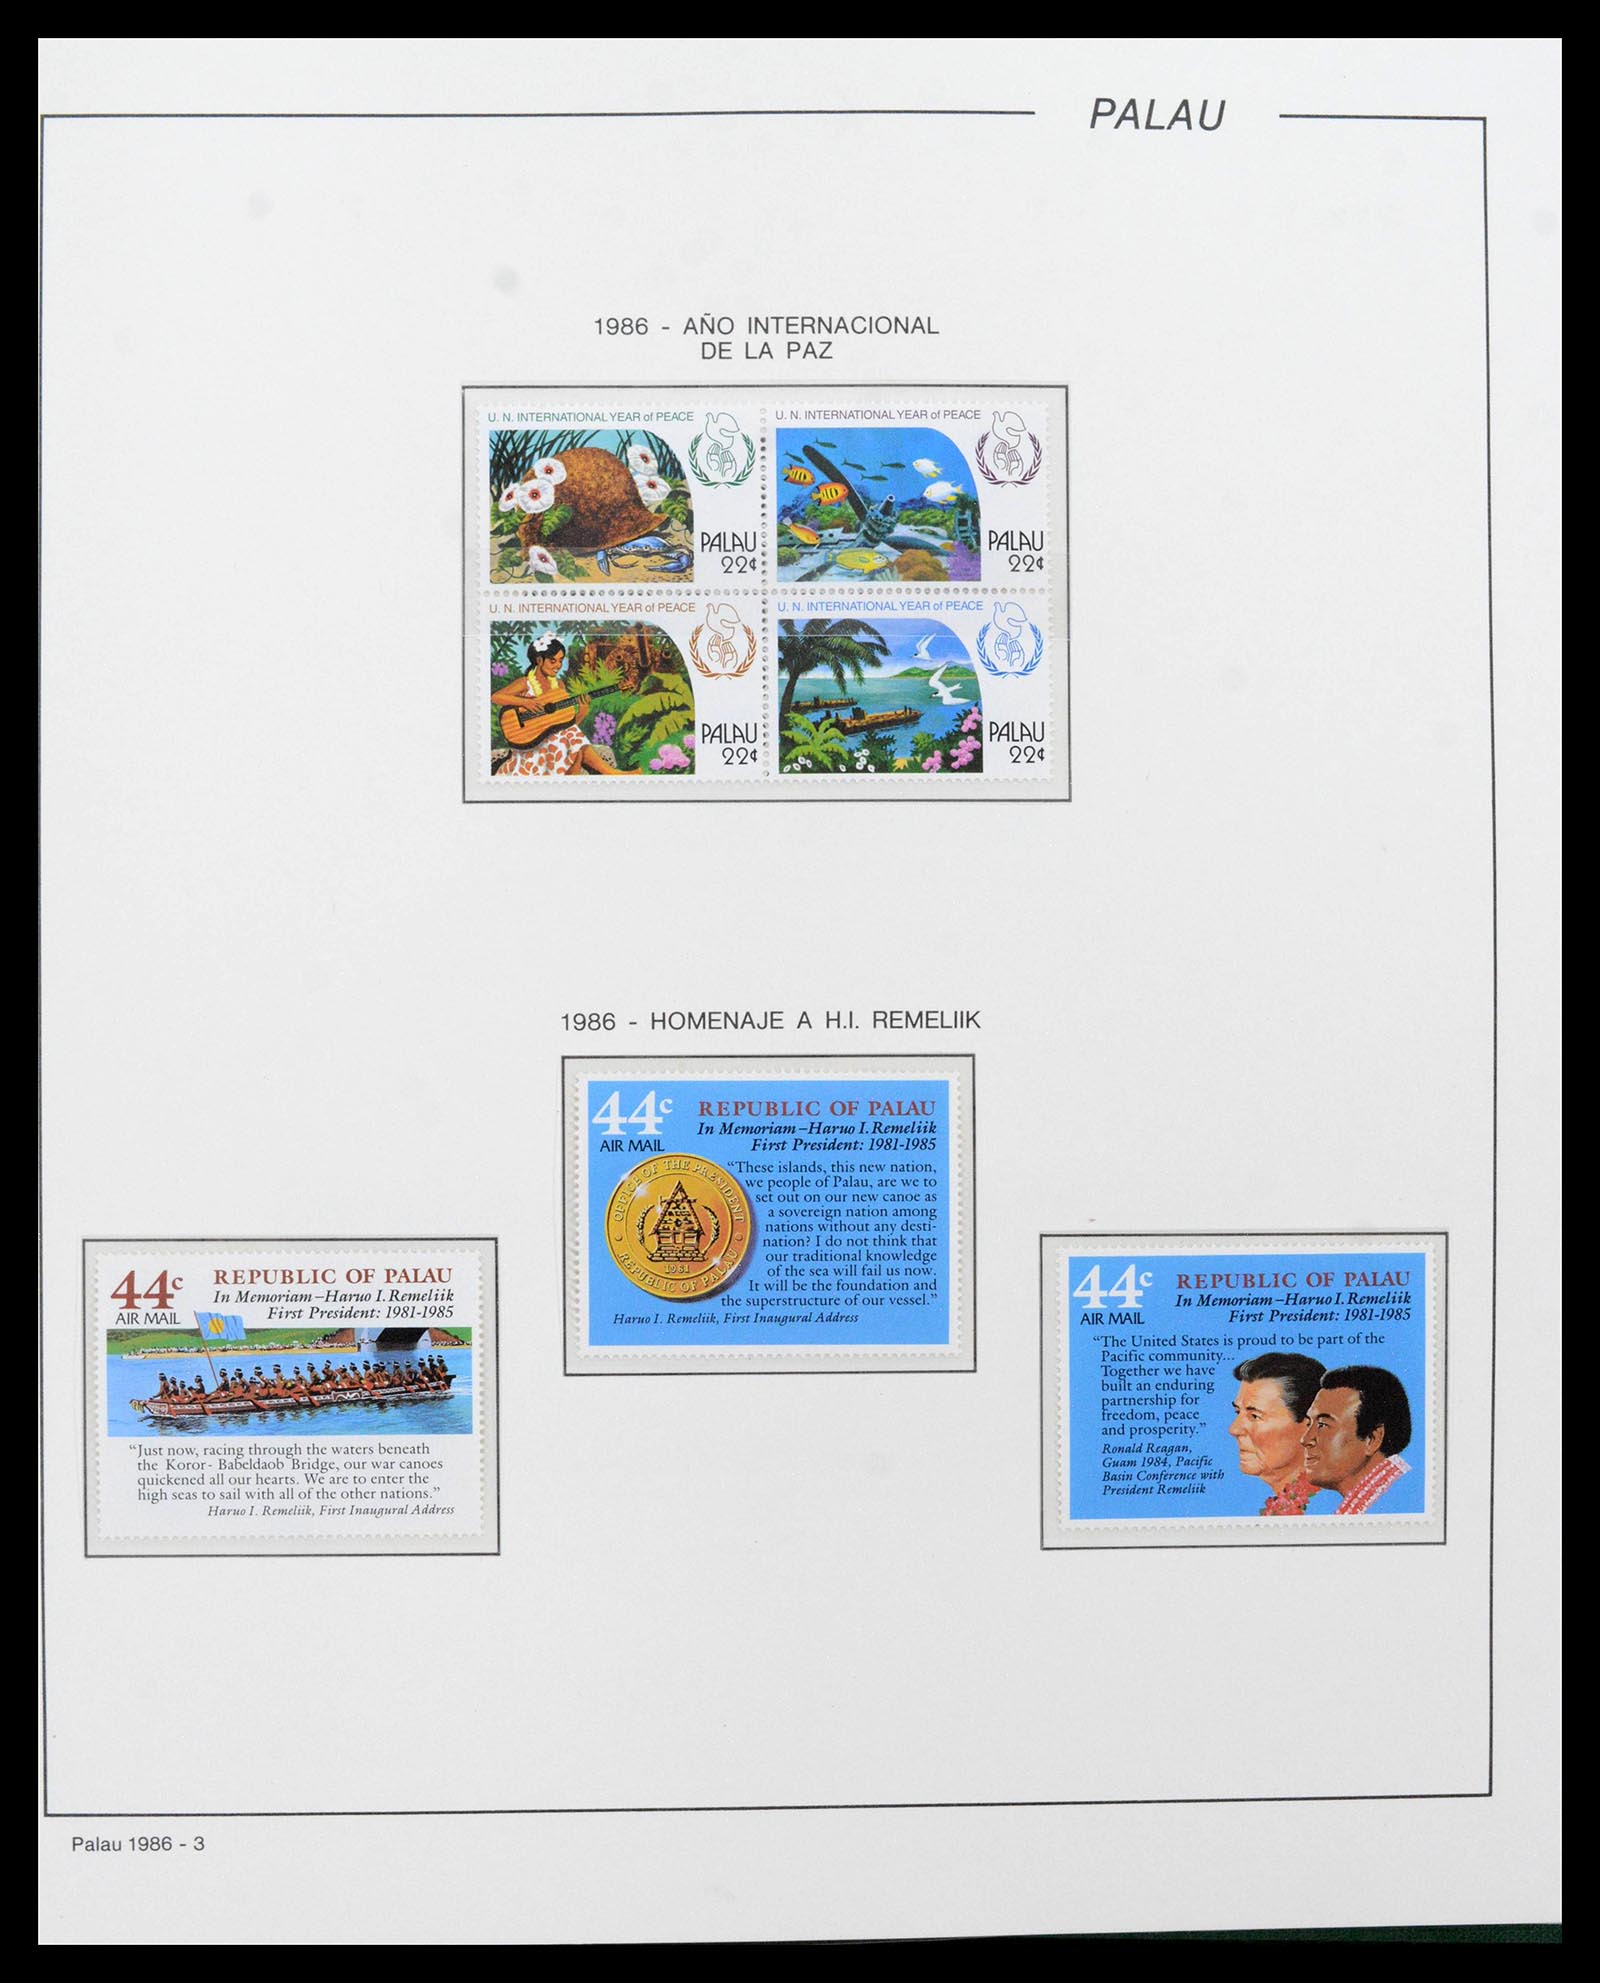 39222 0012 - Stamp collection 39222 Palau, Micronesia and Marshall islands 1980-1995.